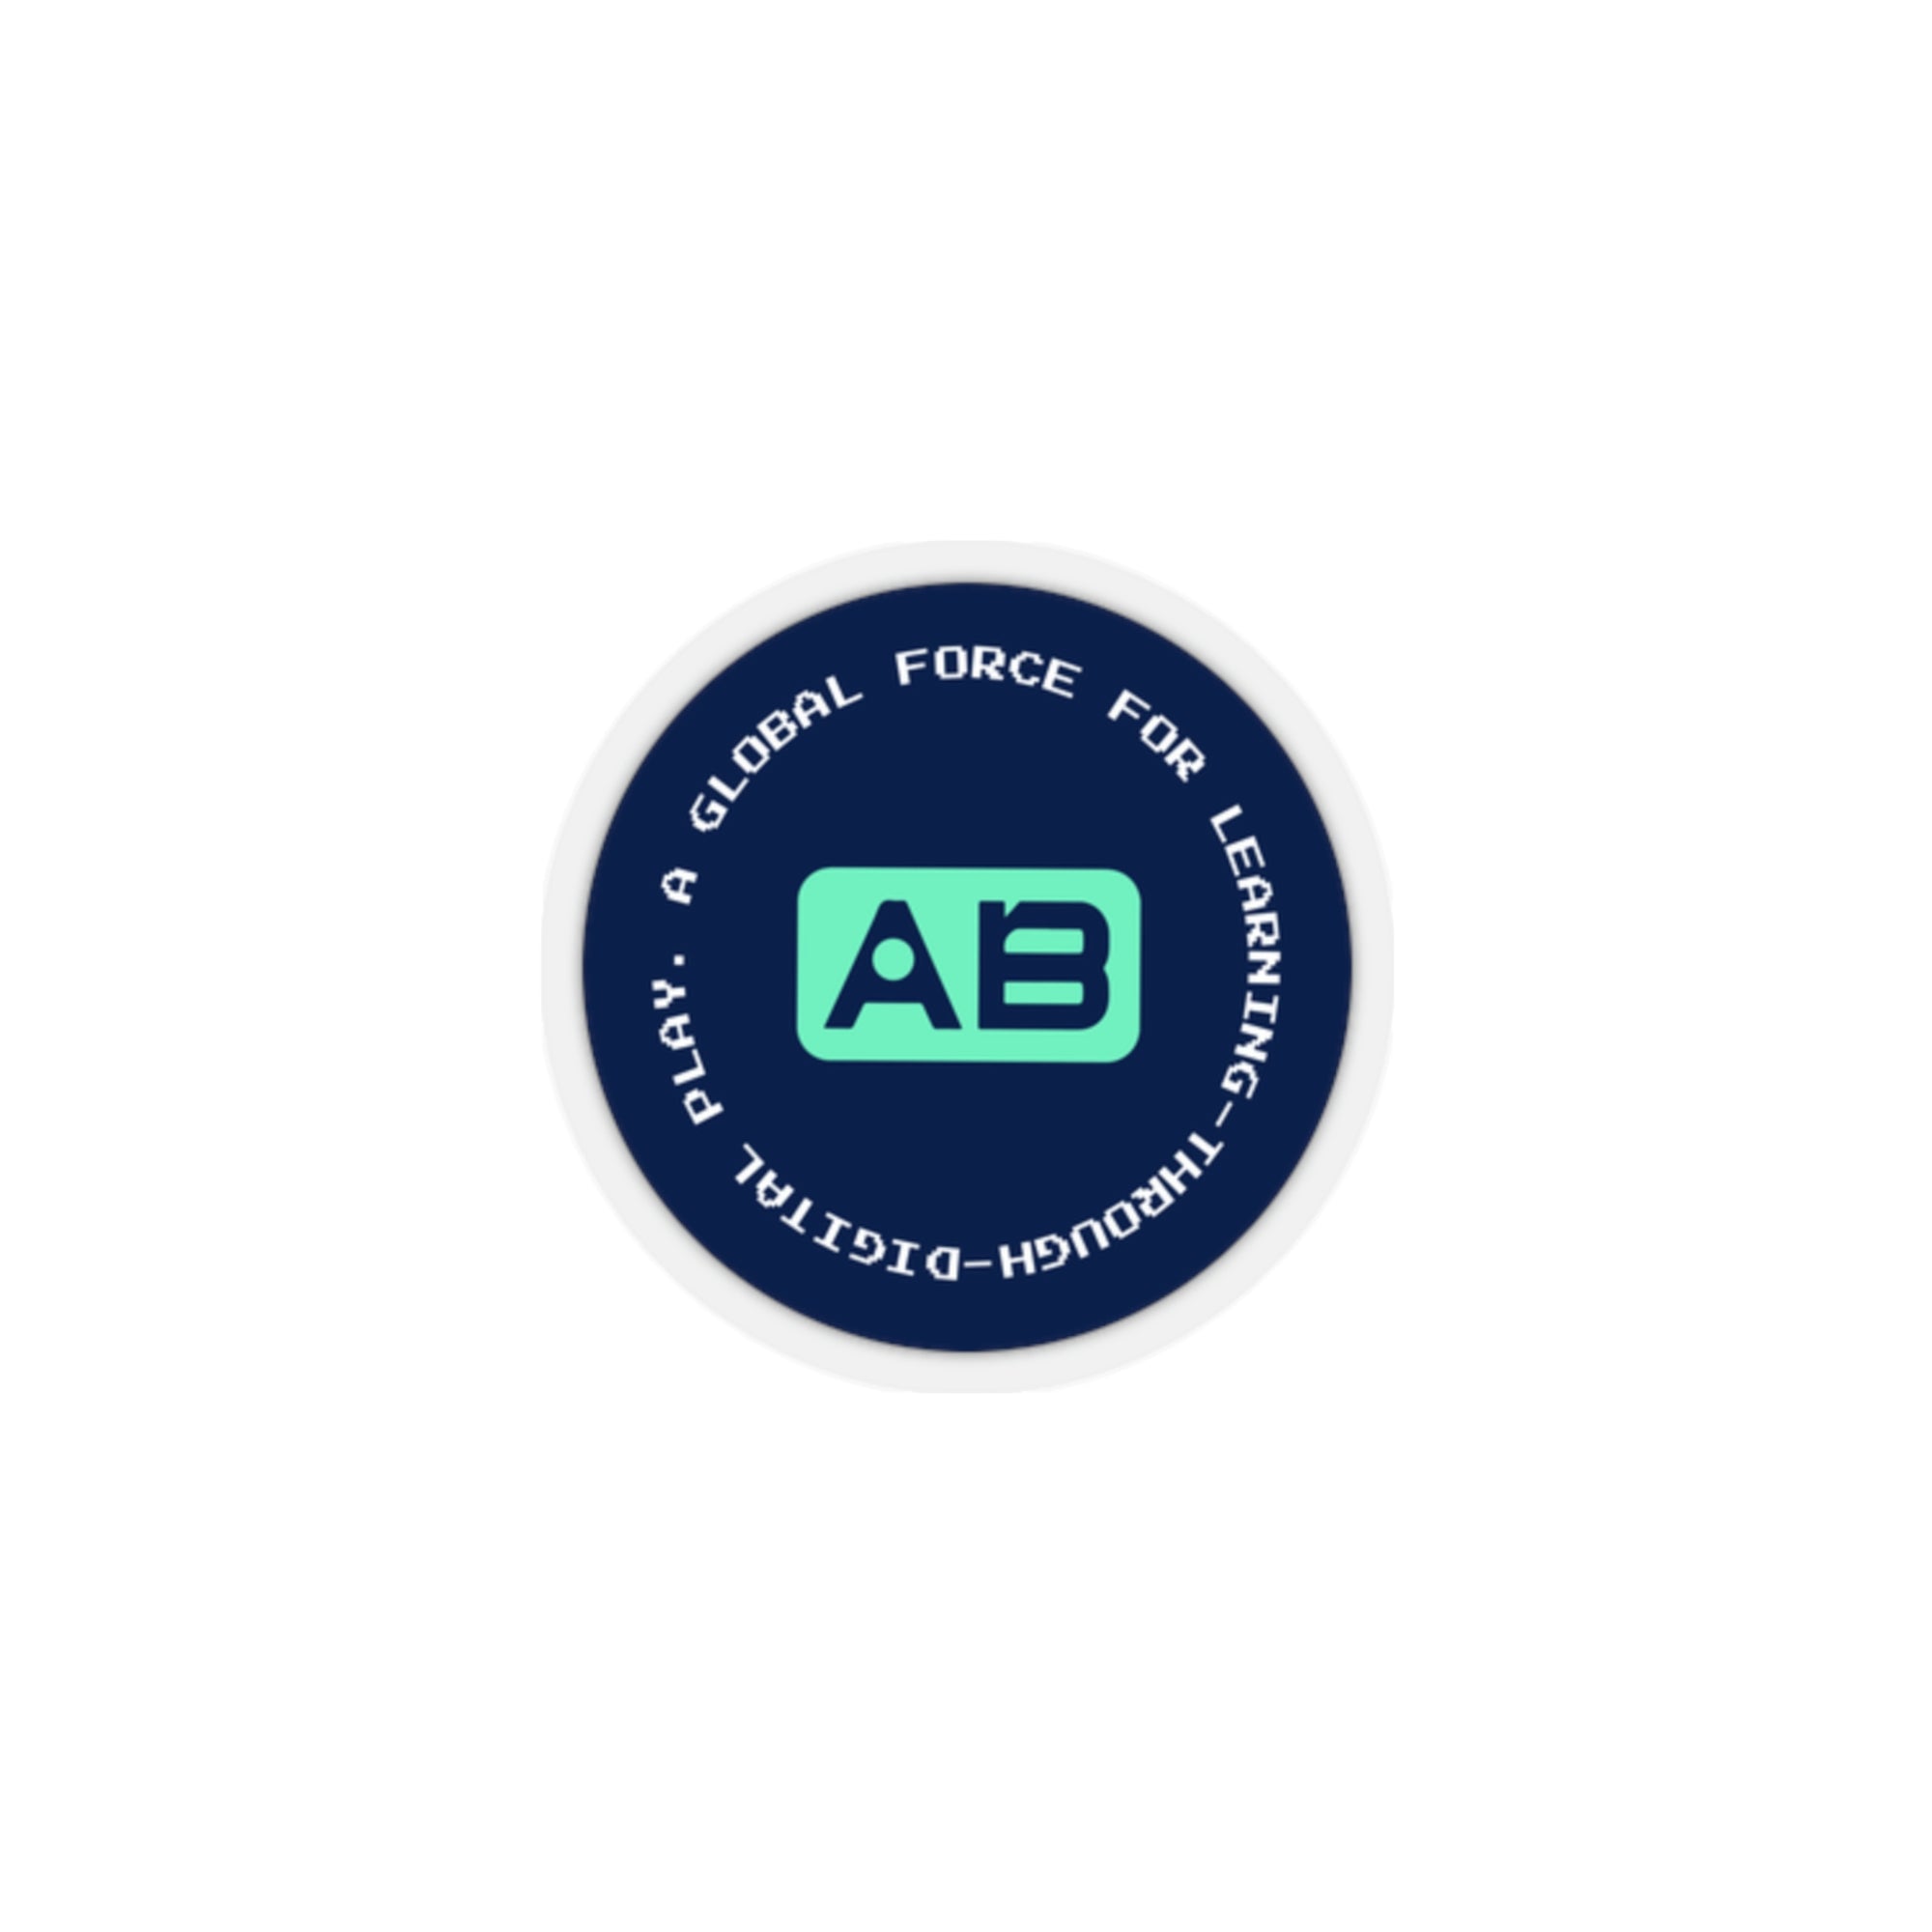 AB "Digital Play" Sticker - Midnight Blue